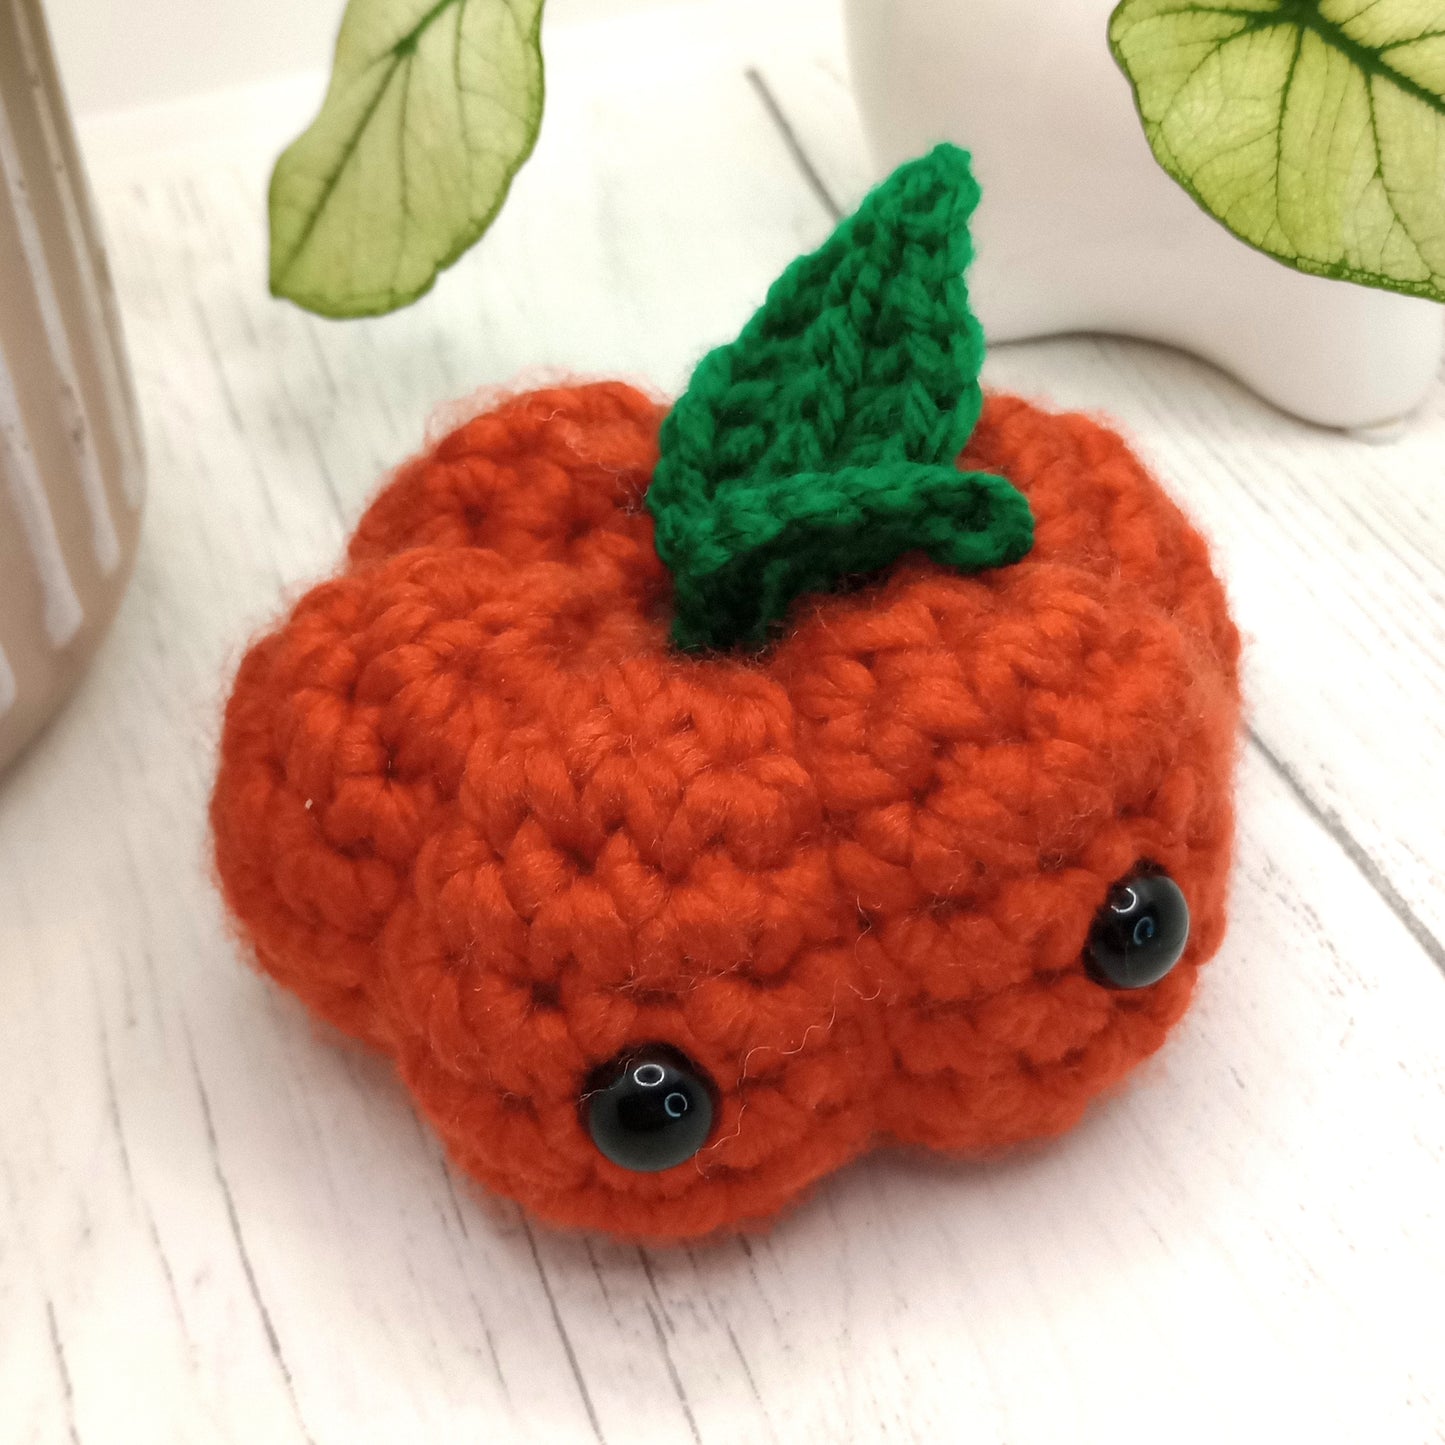 Jack the Pumpkin Crochet Kit